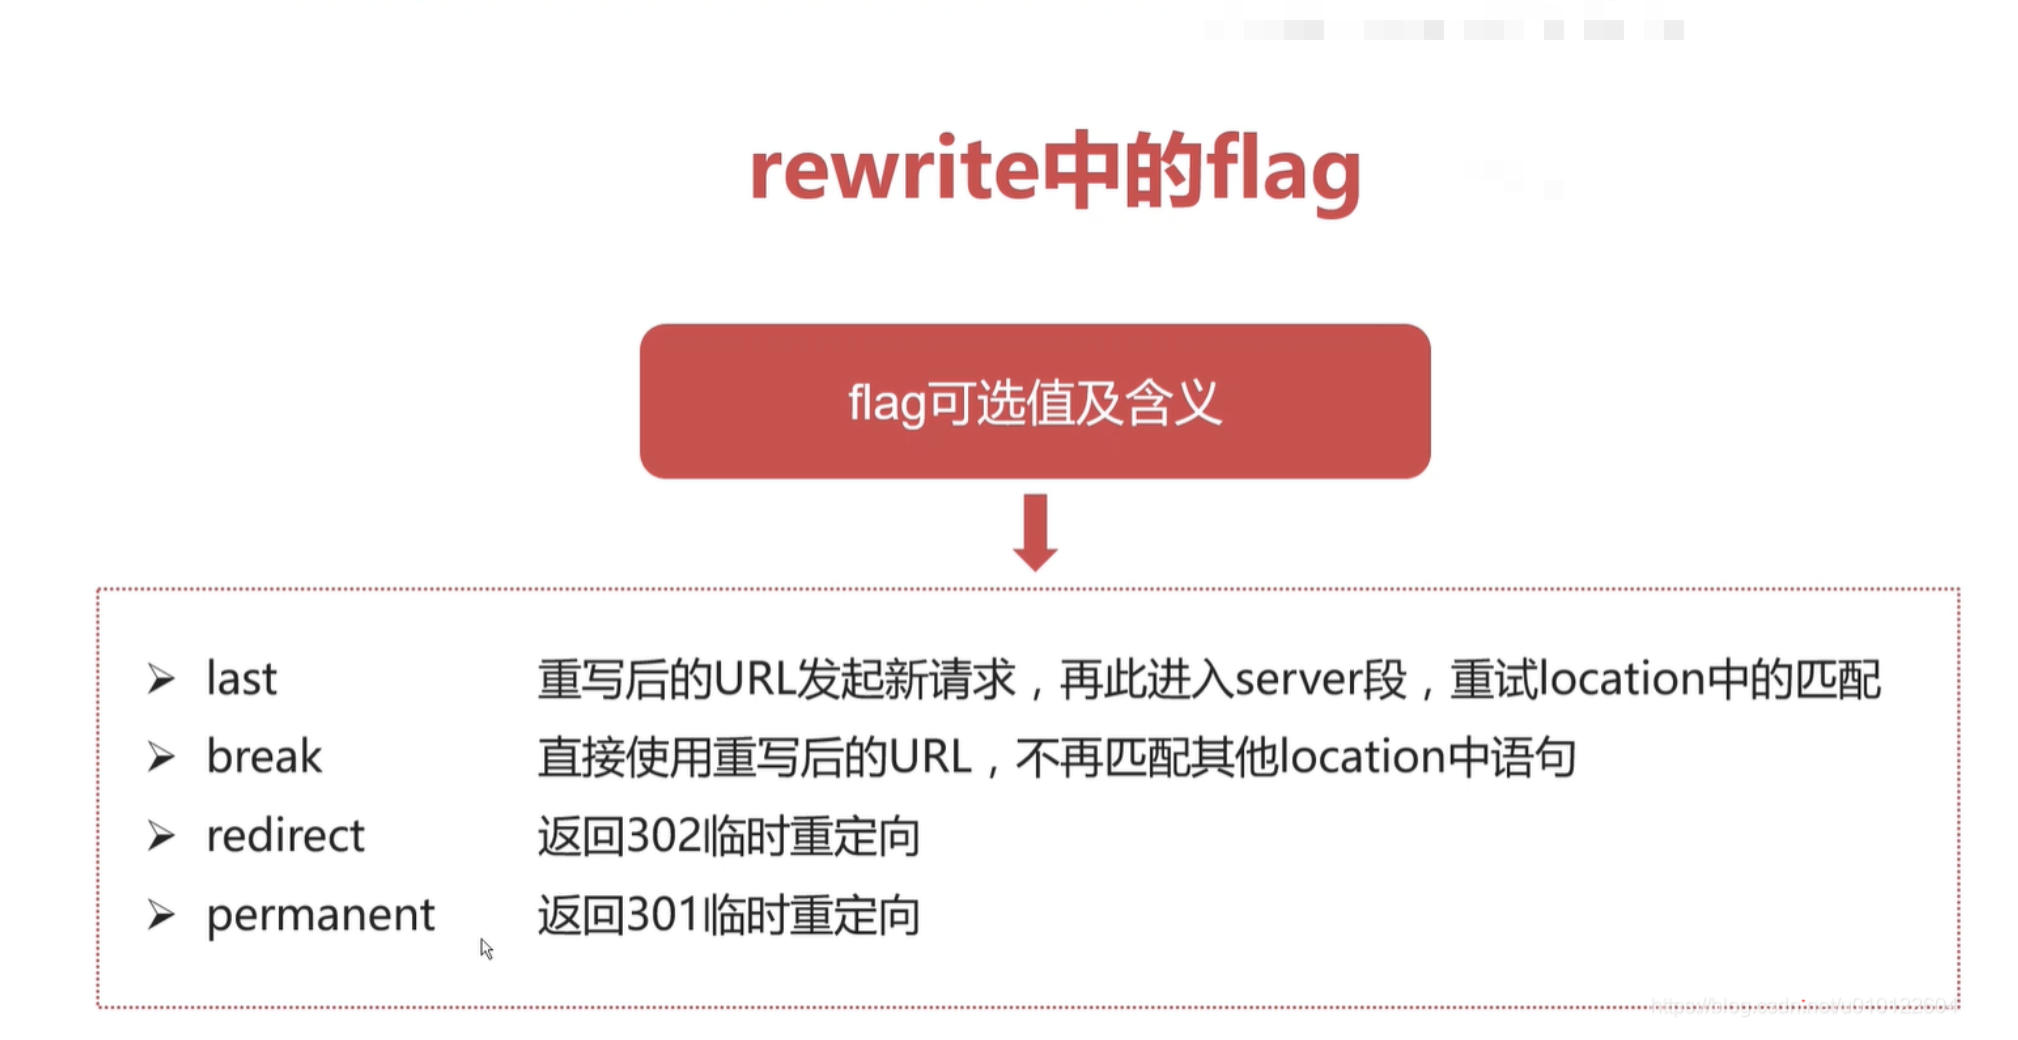 nginx rewirte内flag可选值及定义